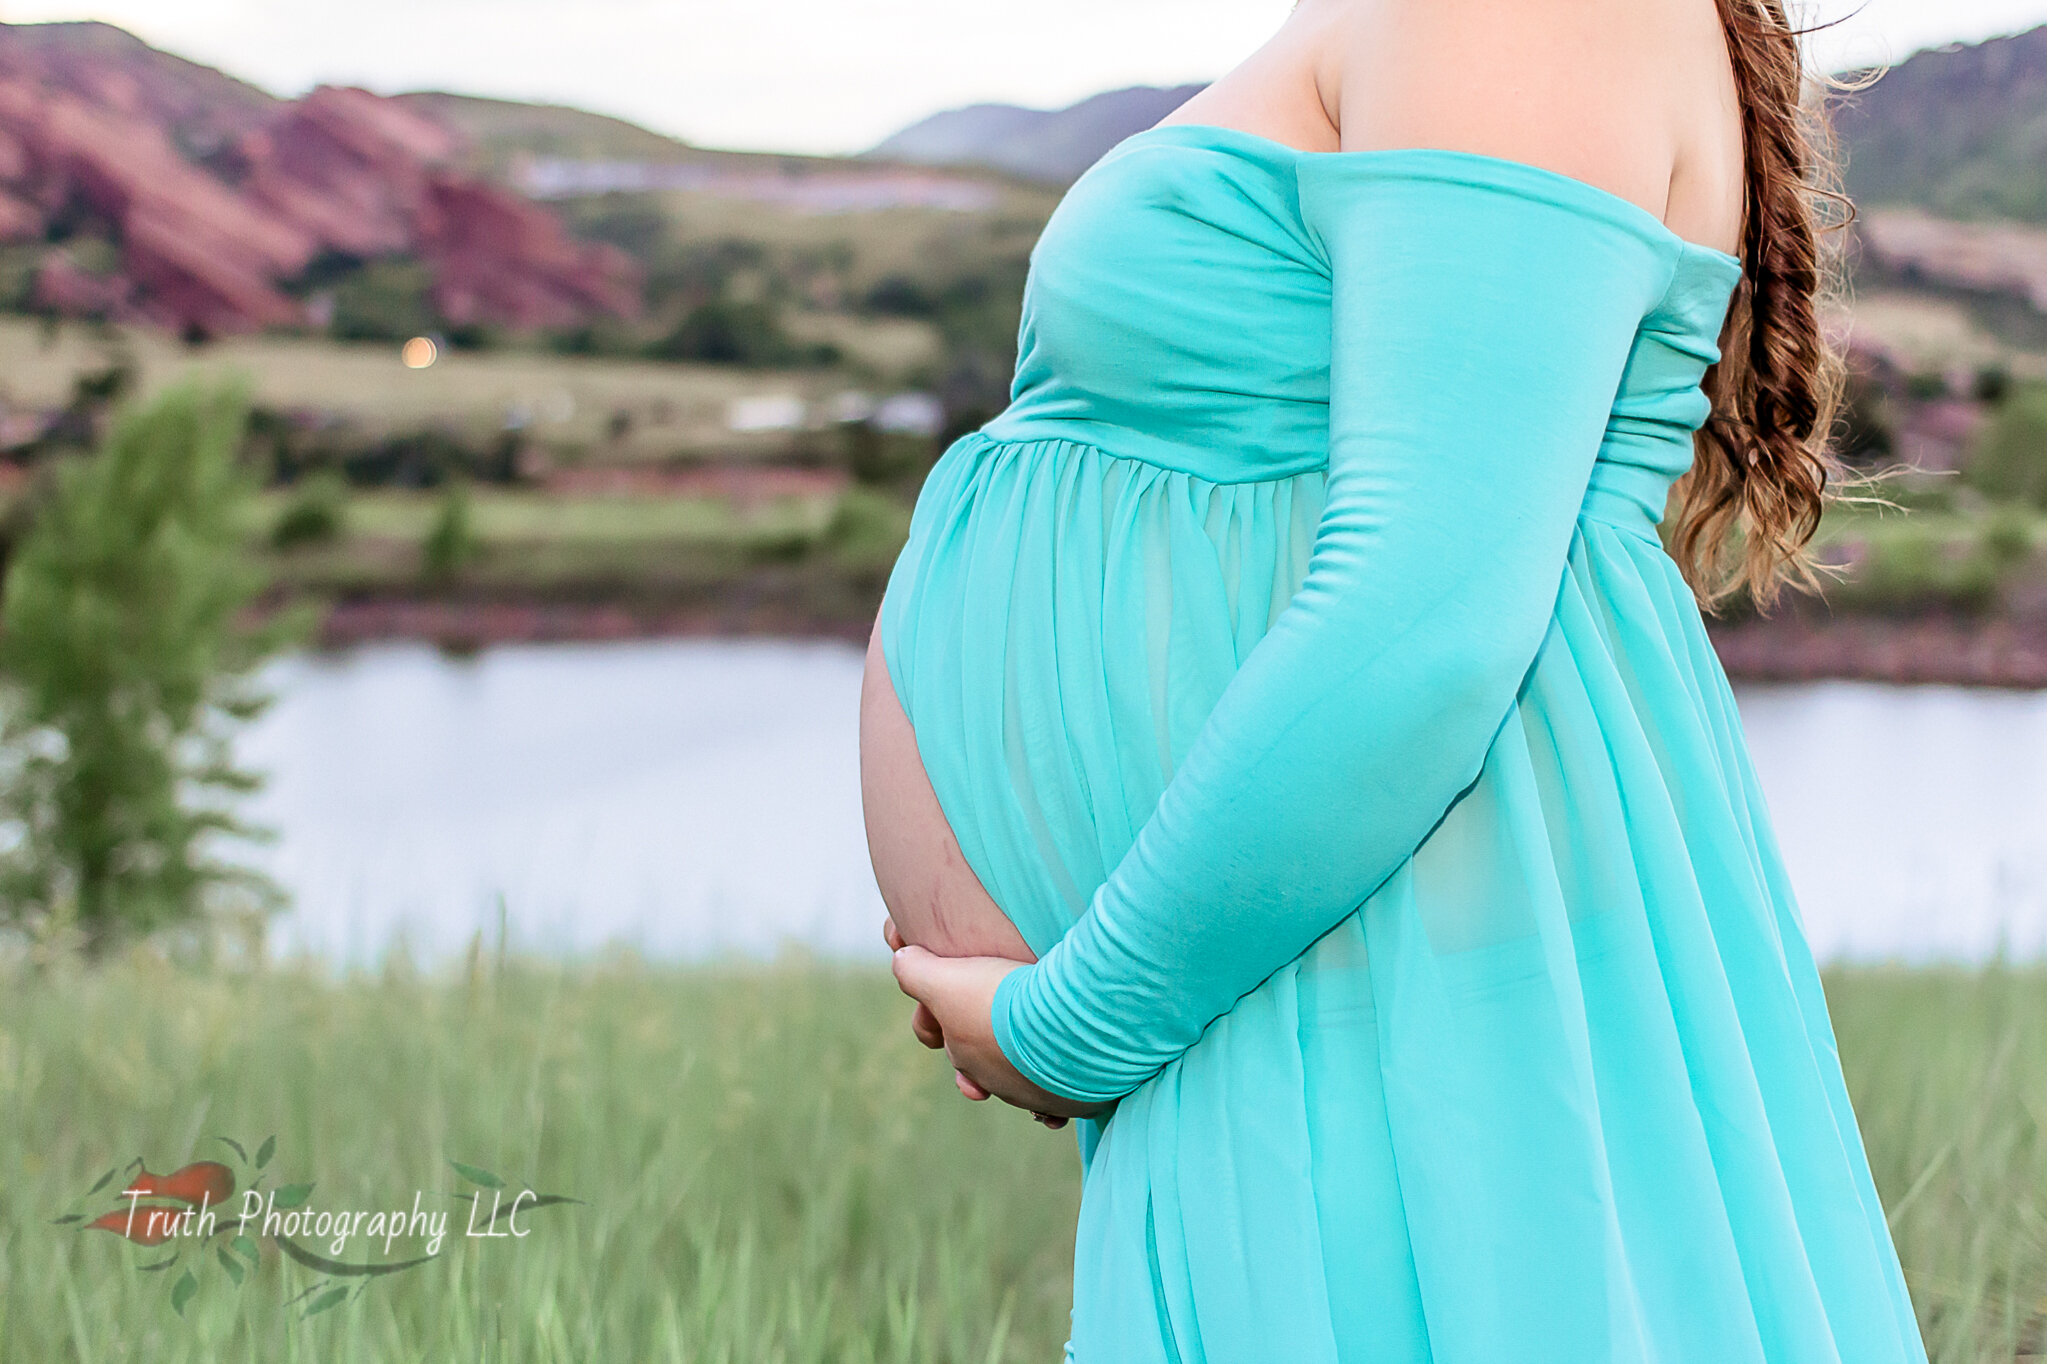 Truth-Photography-Morrison-co-Maternity-photo-shoots.jpg